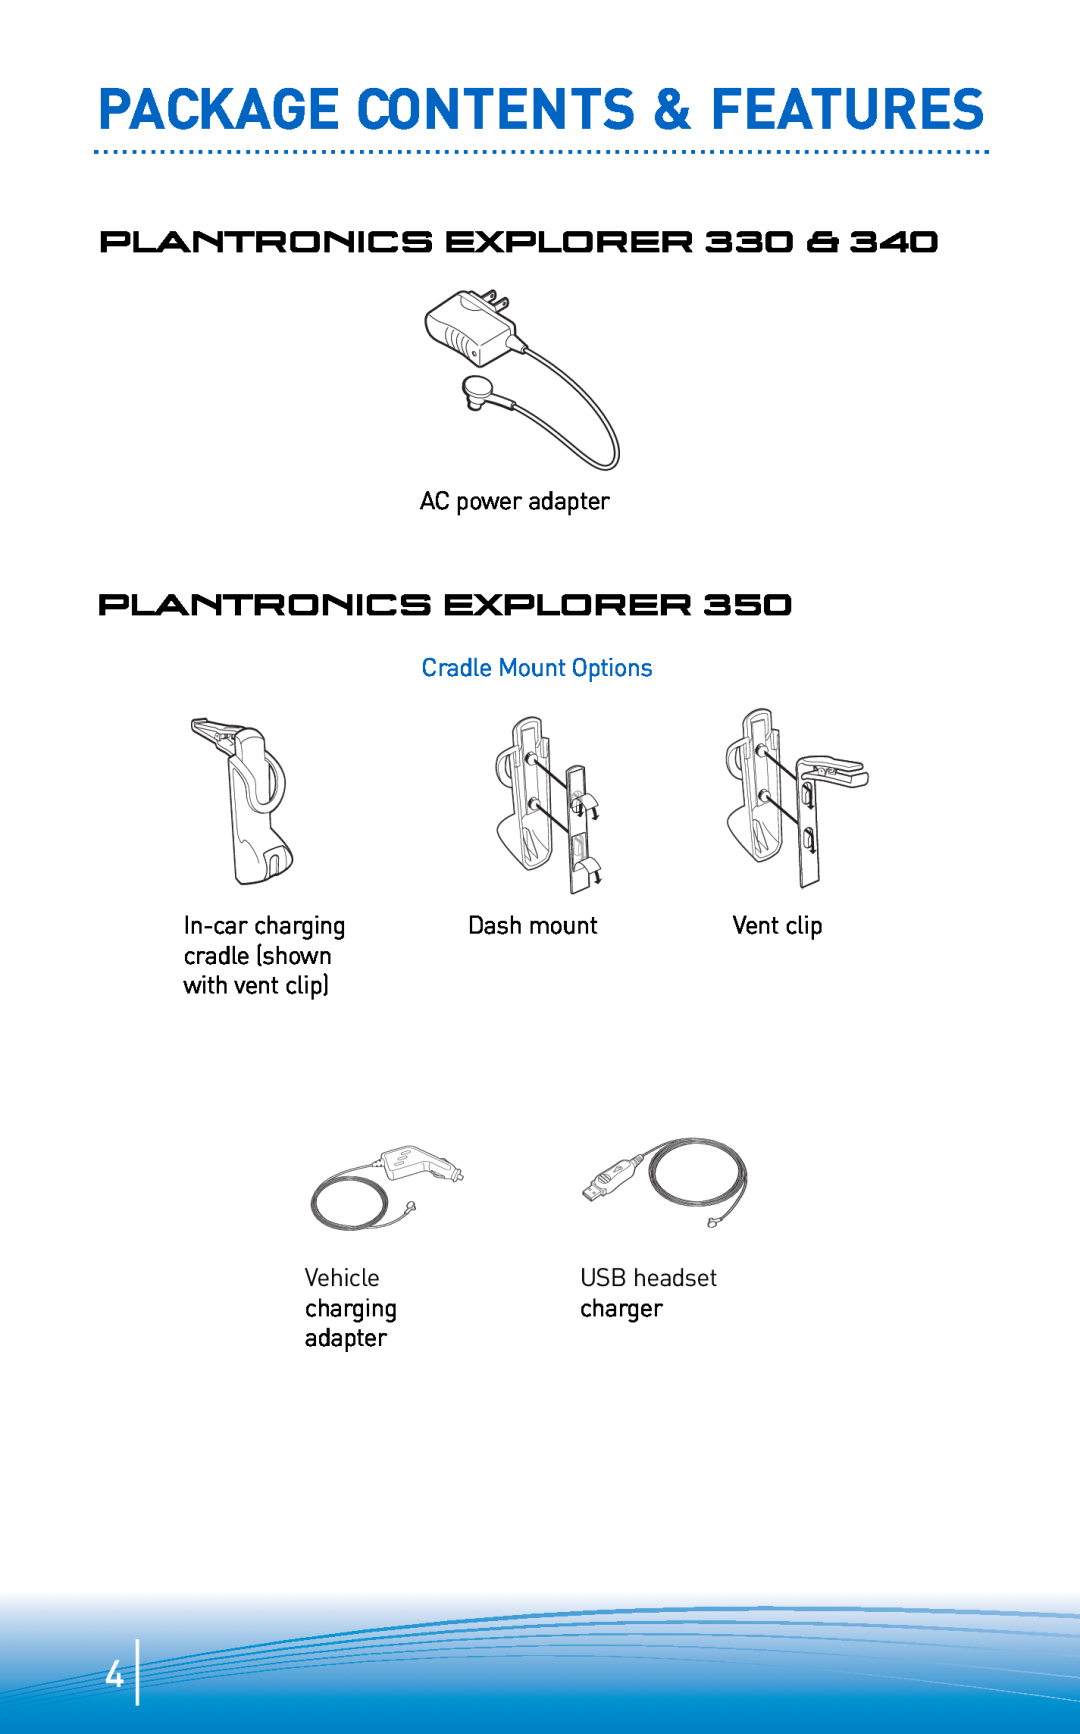 Plantronics 300 Series Plantronics Explorer, Cradle Mount Options, Package Contents & Features, AC power adapter, Vehicle 